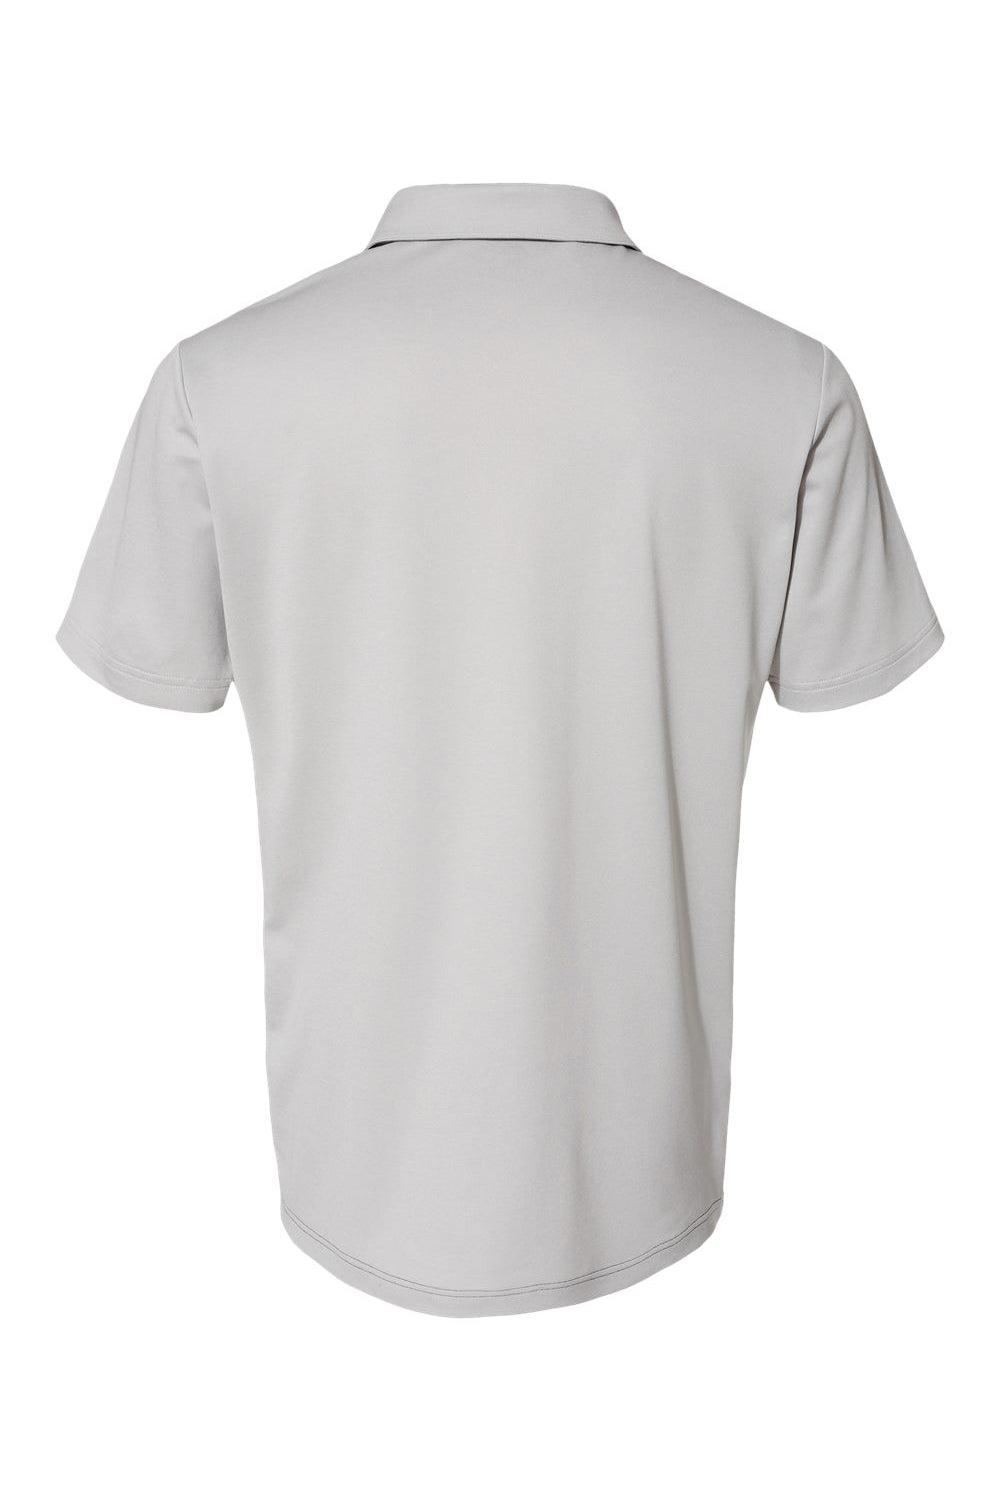 Adidas A508 Mens 3 Stripes Heathered Colorblocked Short Sleeve Polo Shirt Heather Grey/Heather Black Flat Back